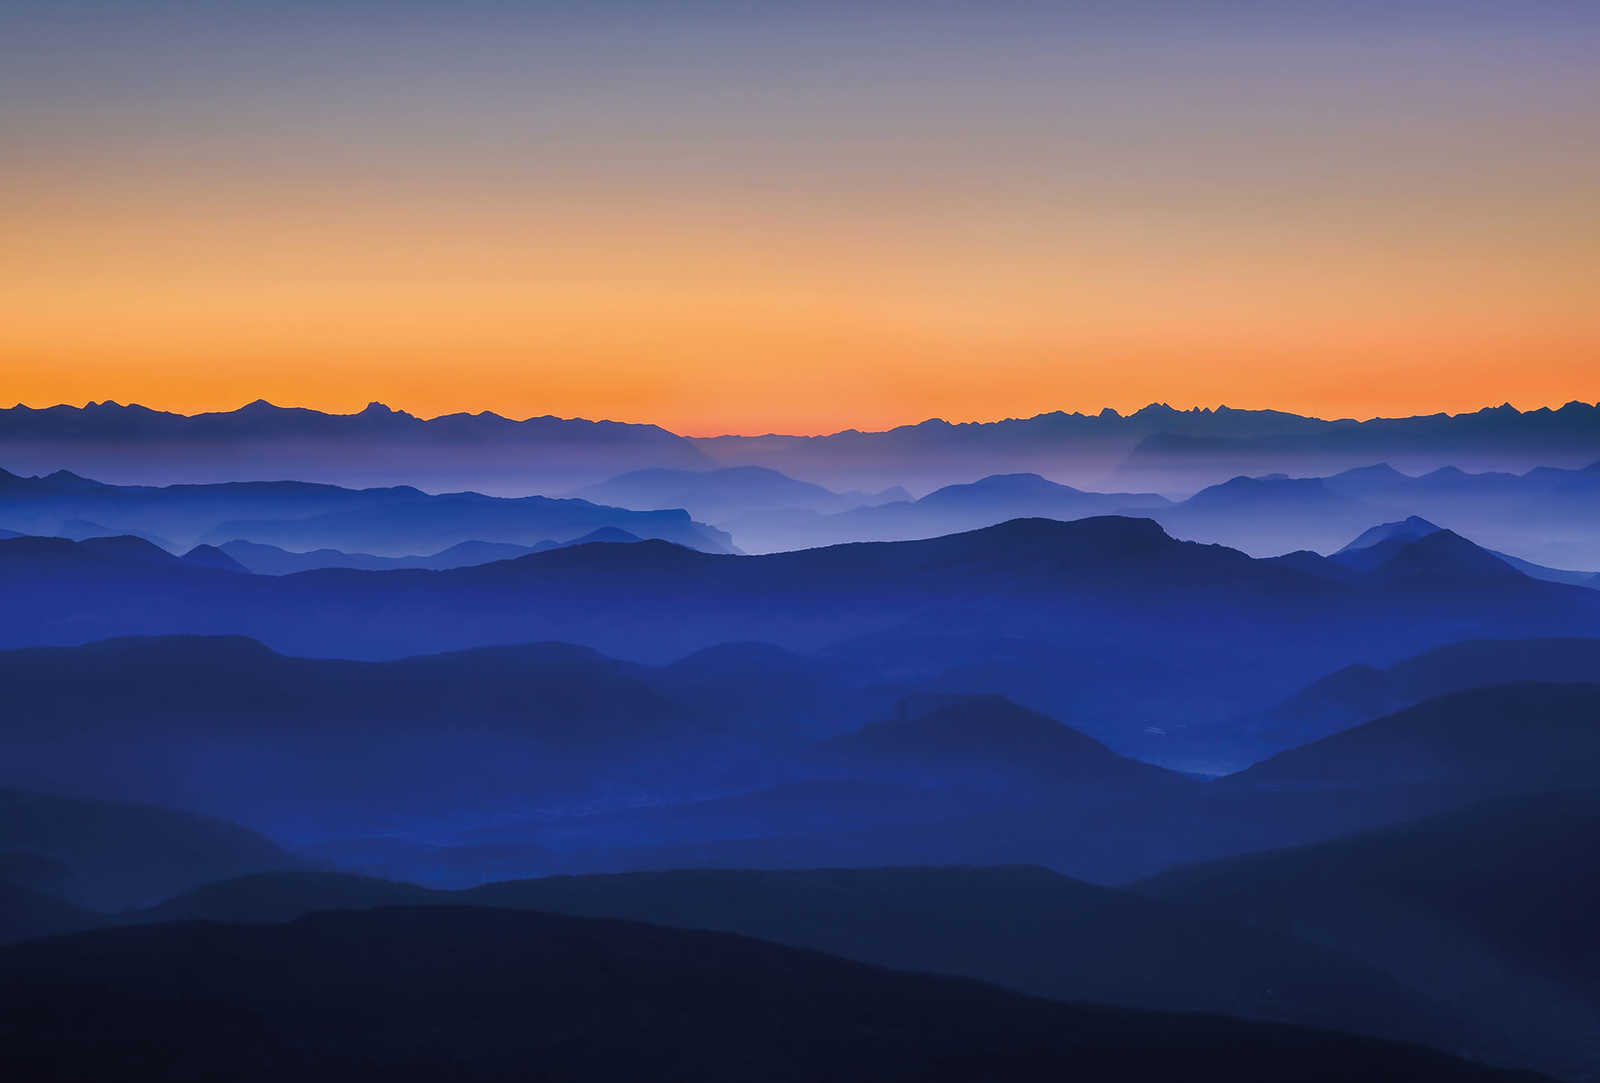 Papel pintado Montañas al amanecer - Azul, naranja, amarillo
